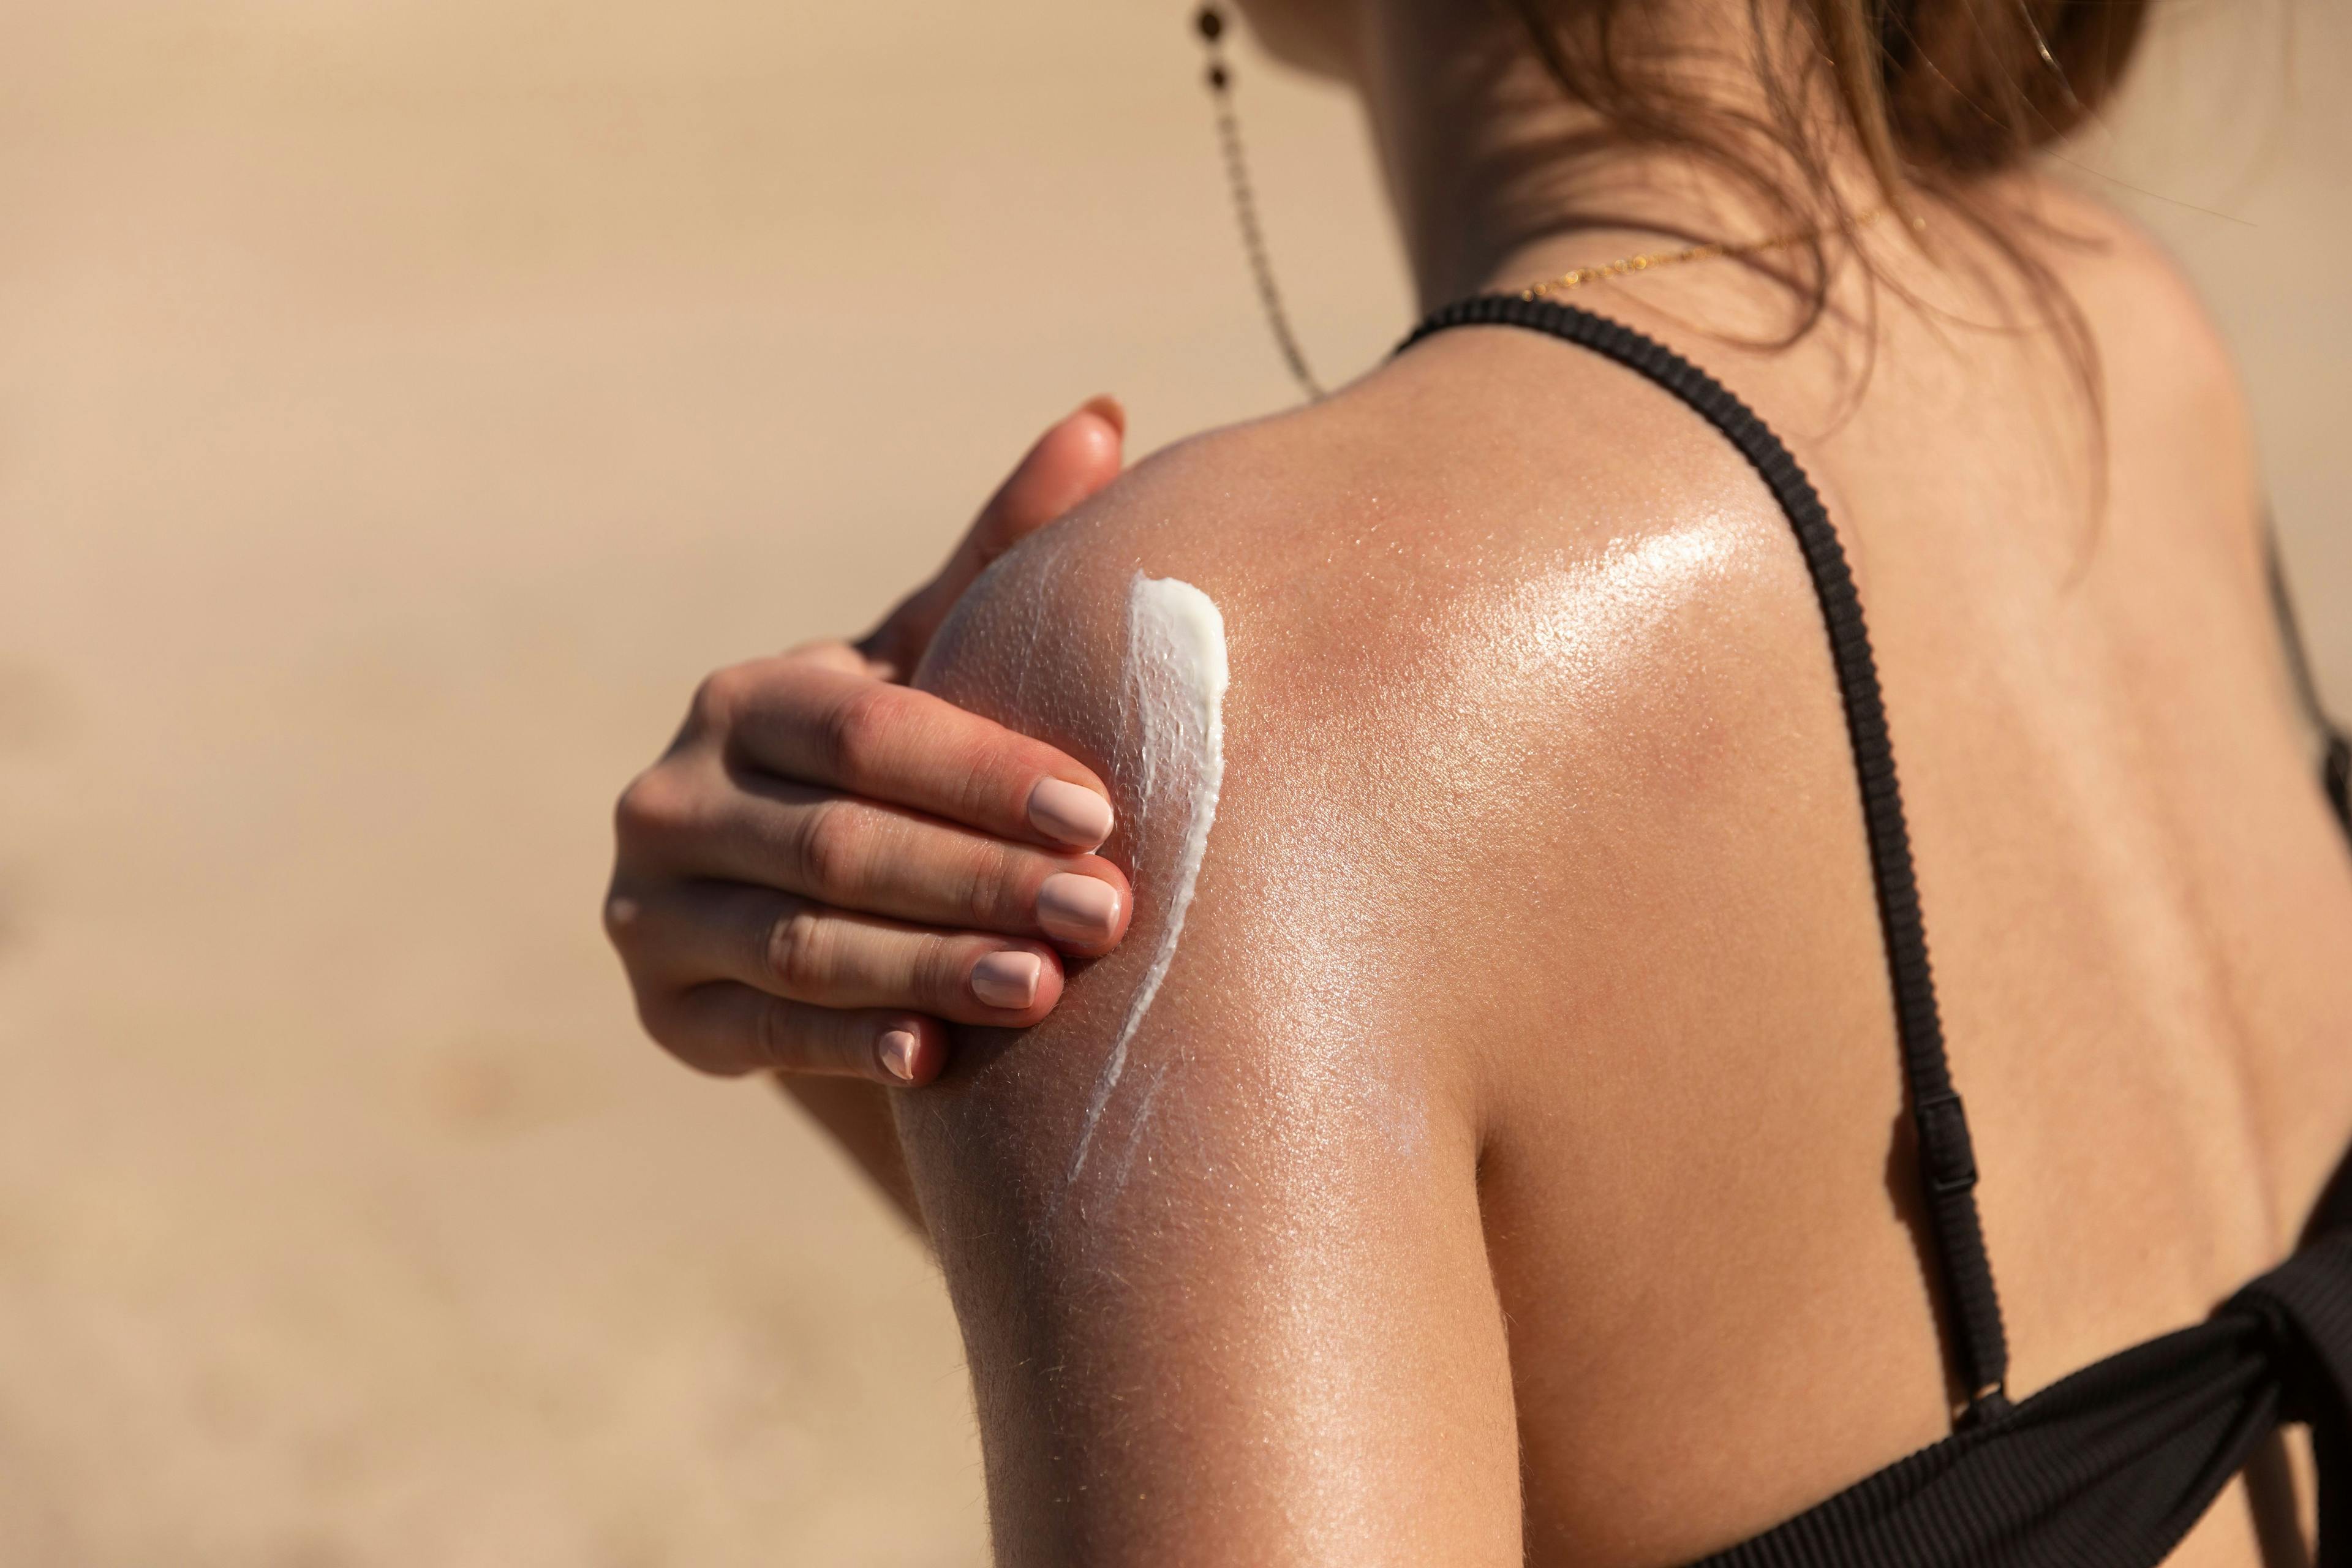 woman applying sunscreen on her shoulder | Image Credit: Lea - stock.adobe.com